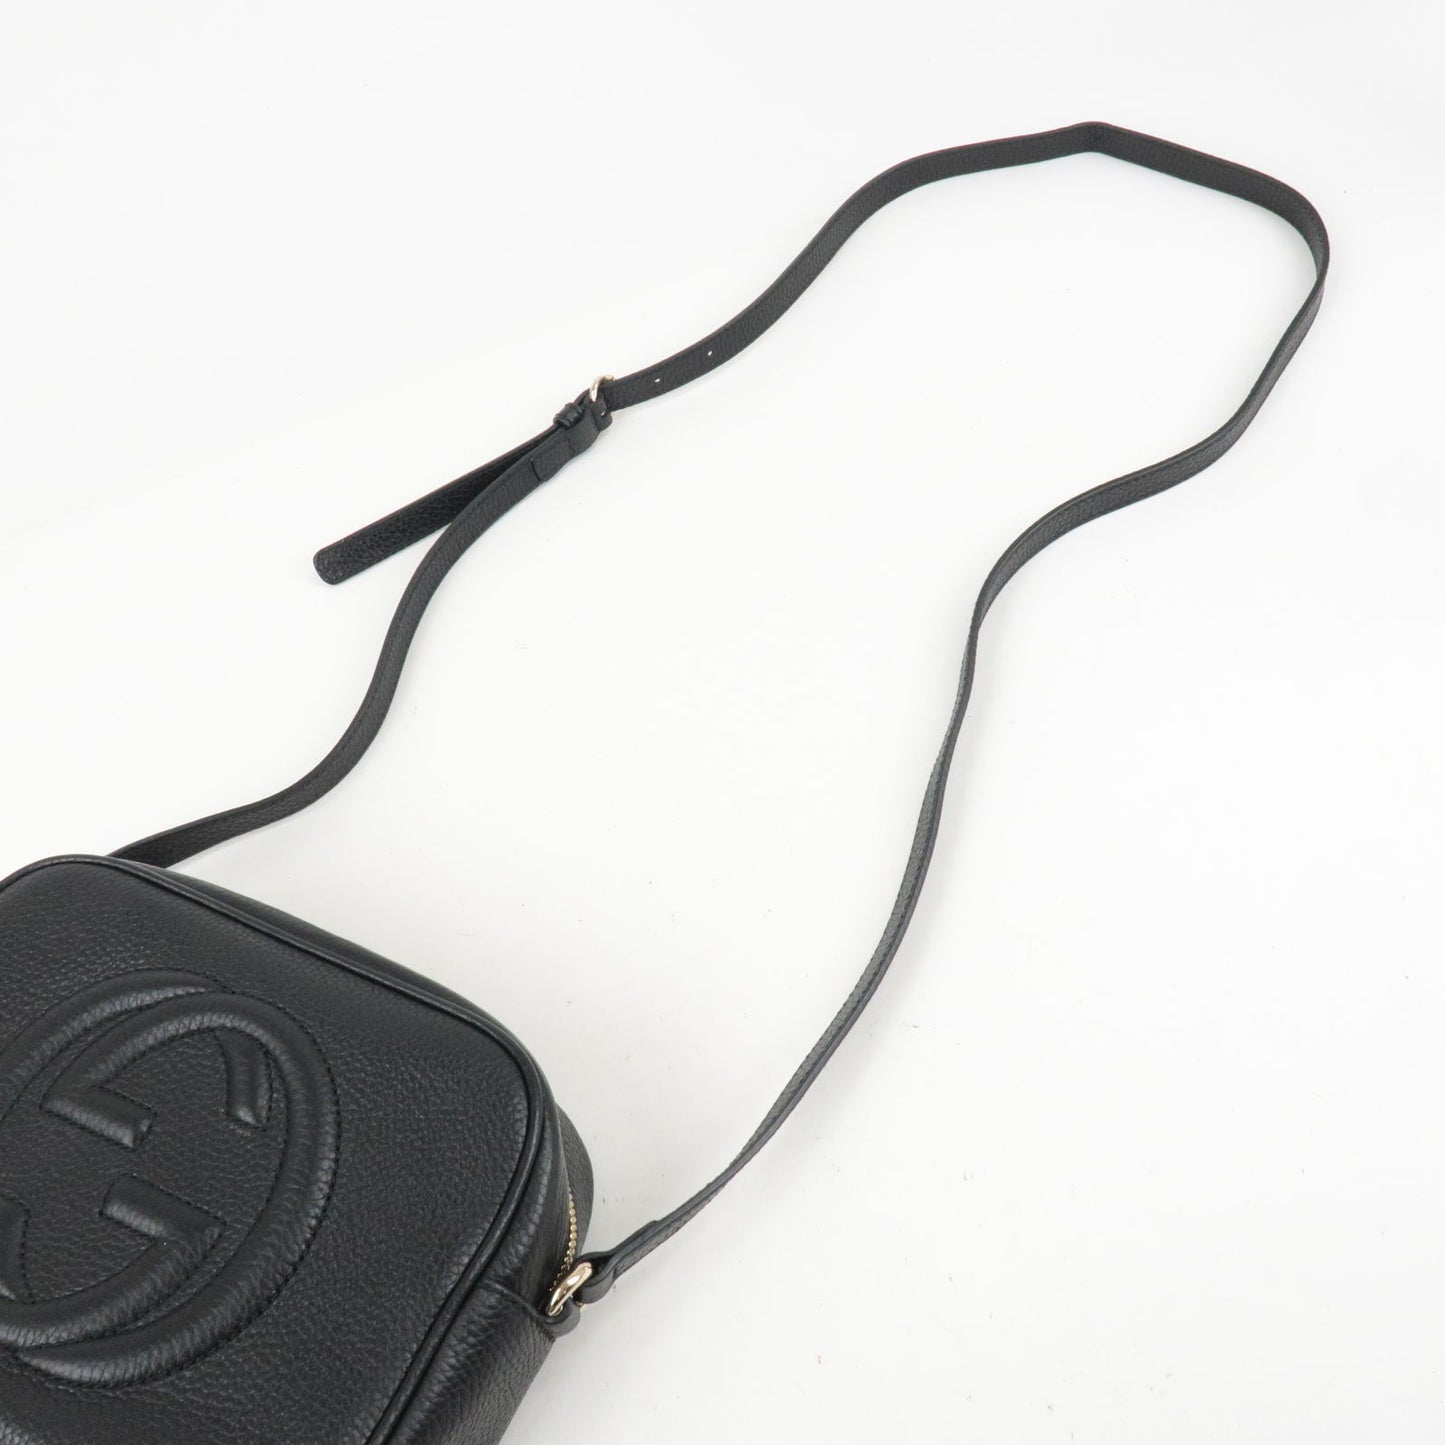 GUCCI SOHO Small Disco Leather Shoulder Bag Black 308364